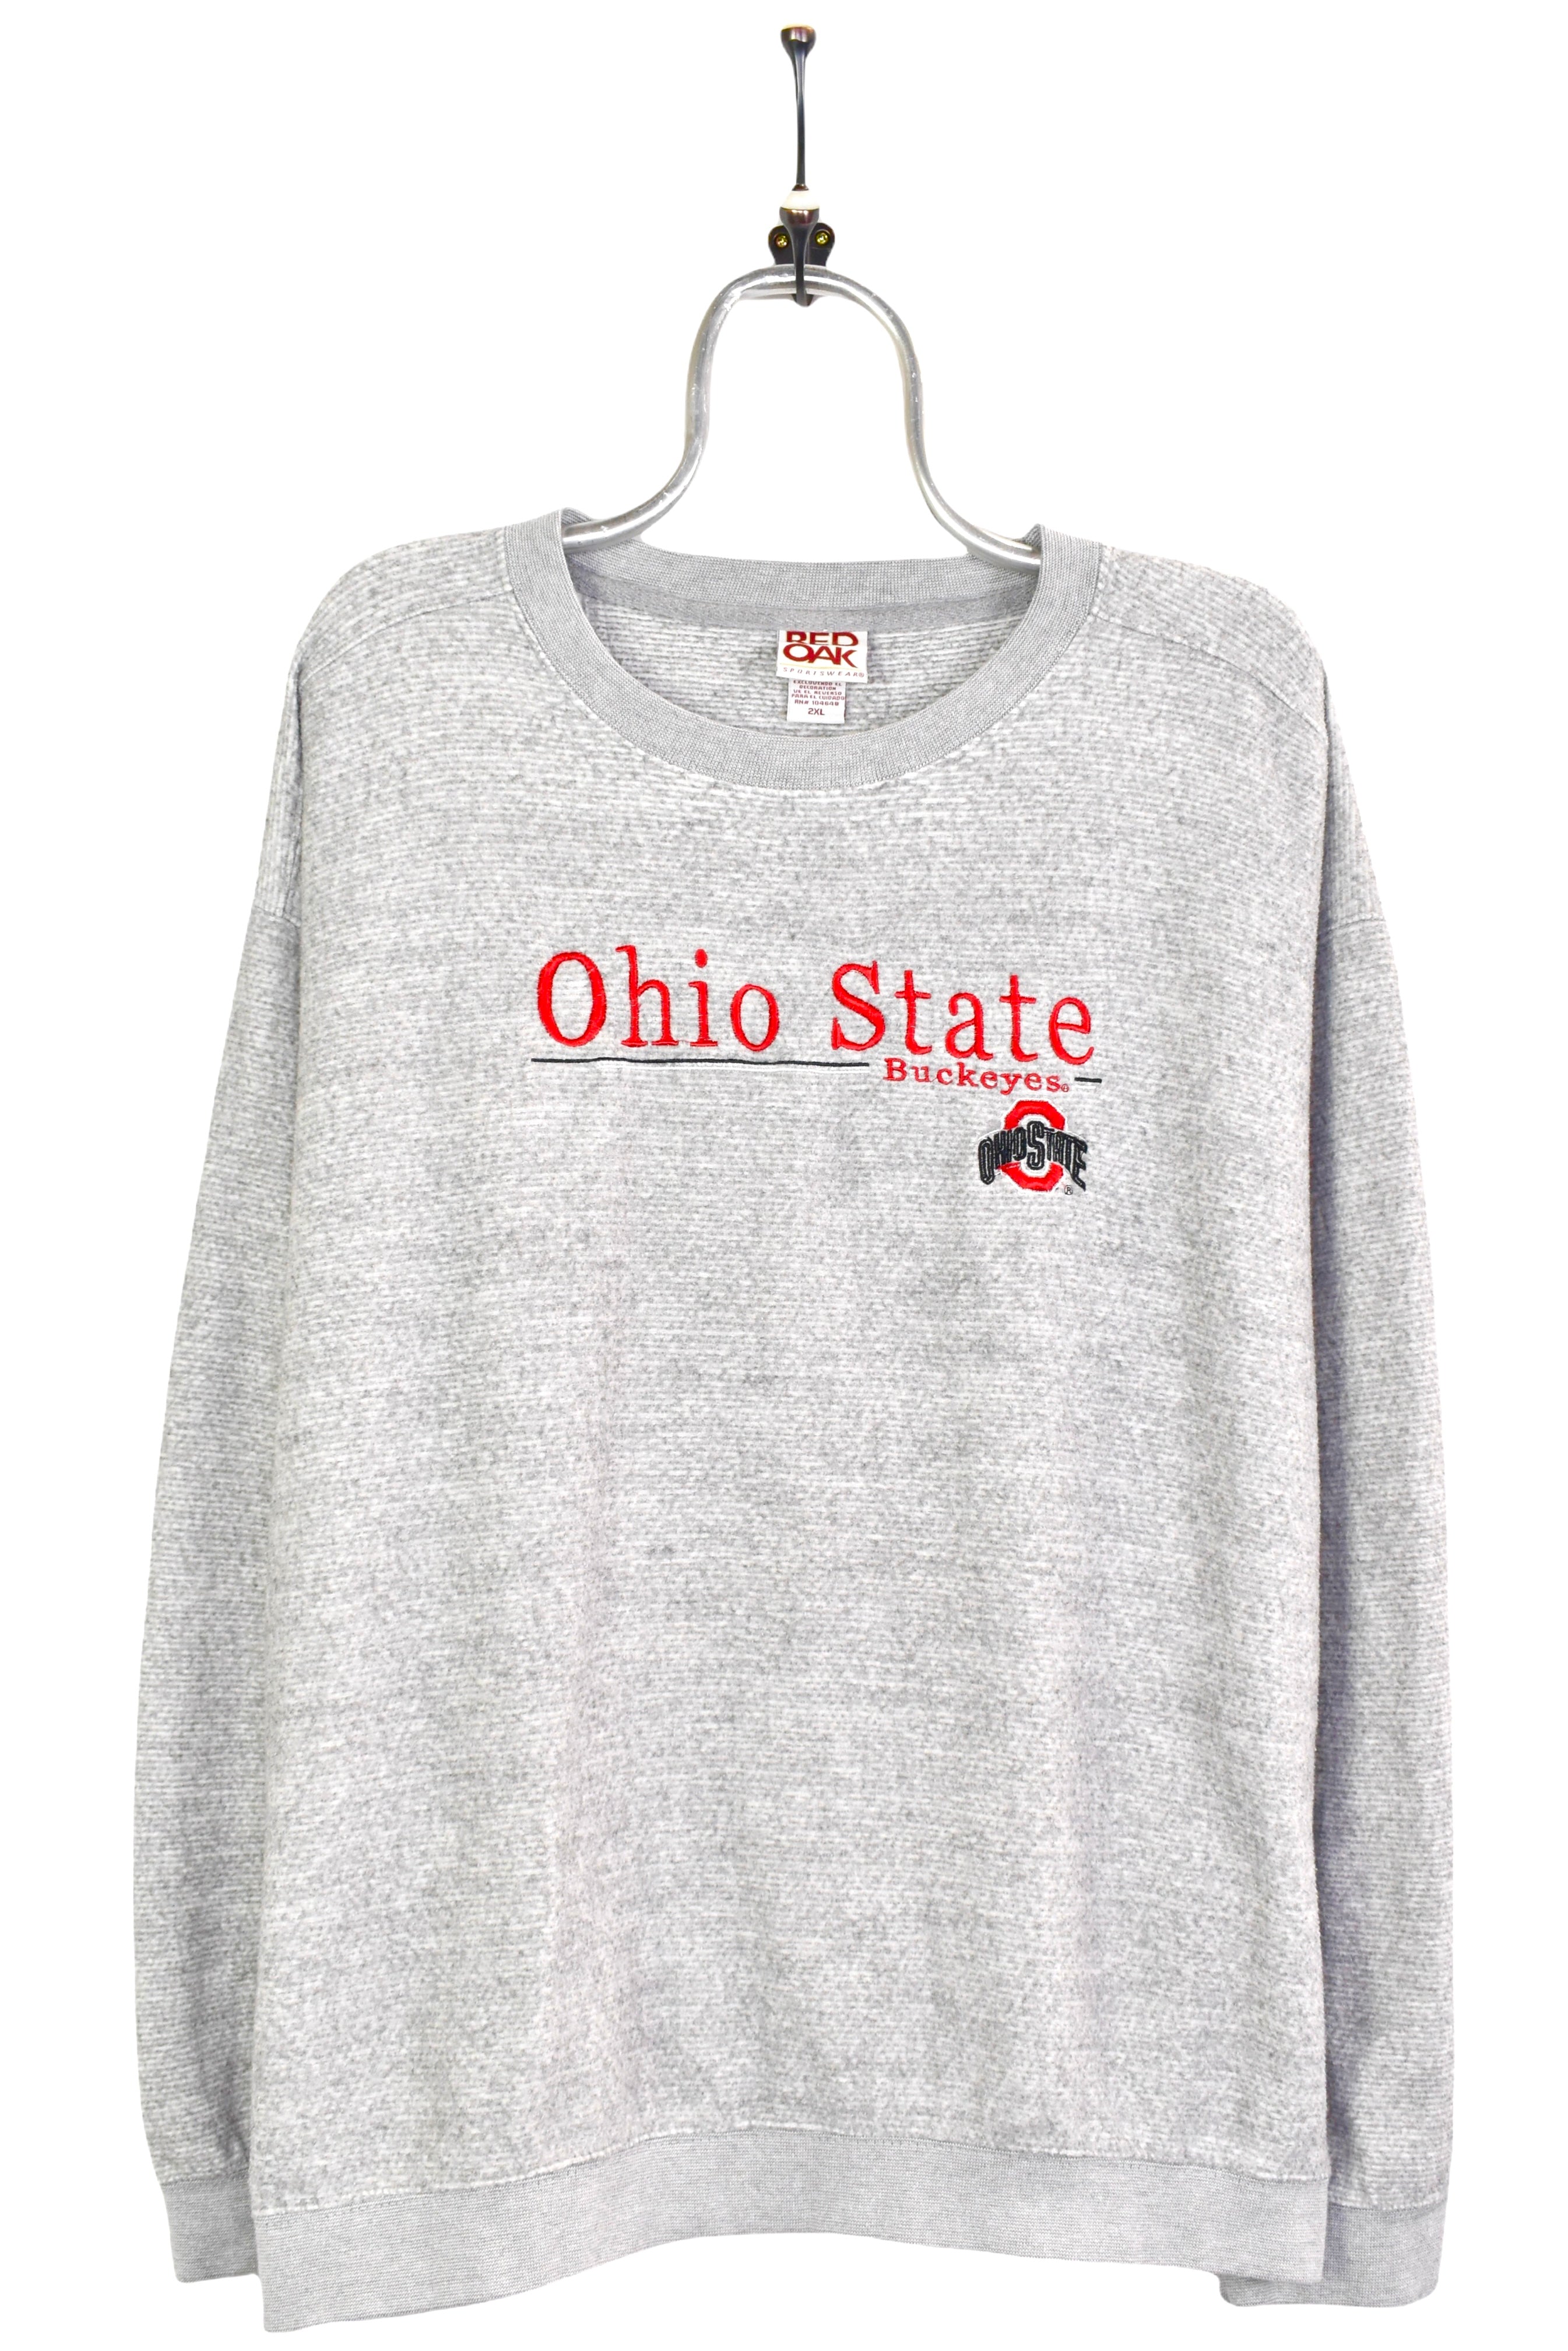 Vintage Ohio State University Buckeyes embroidered grey sweatshirt | XXXL COLLEGE